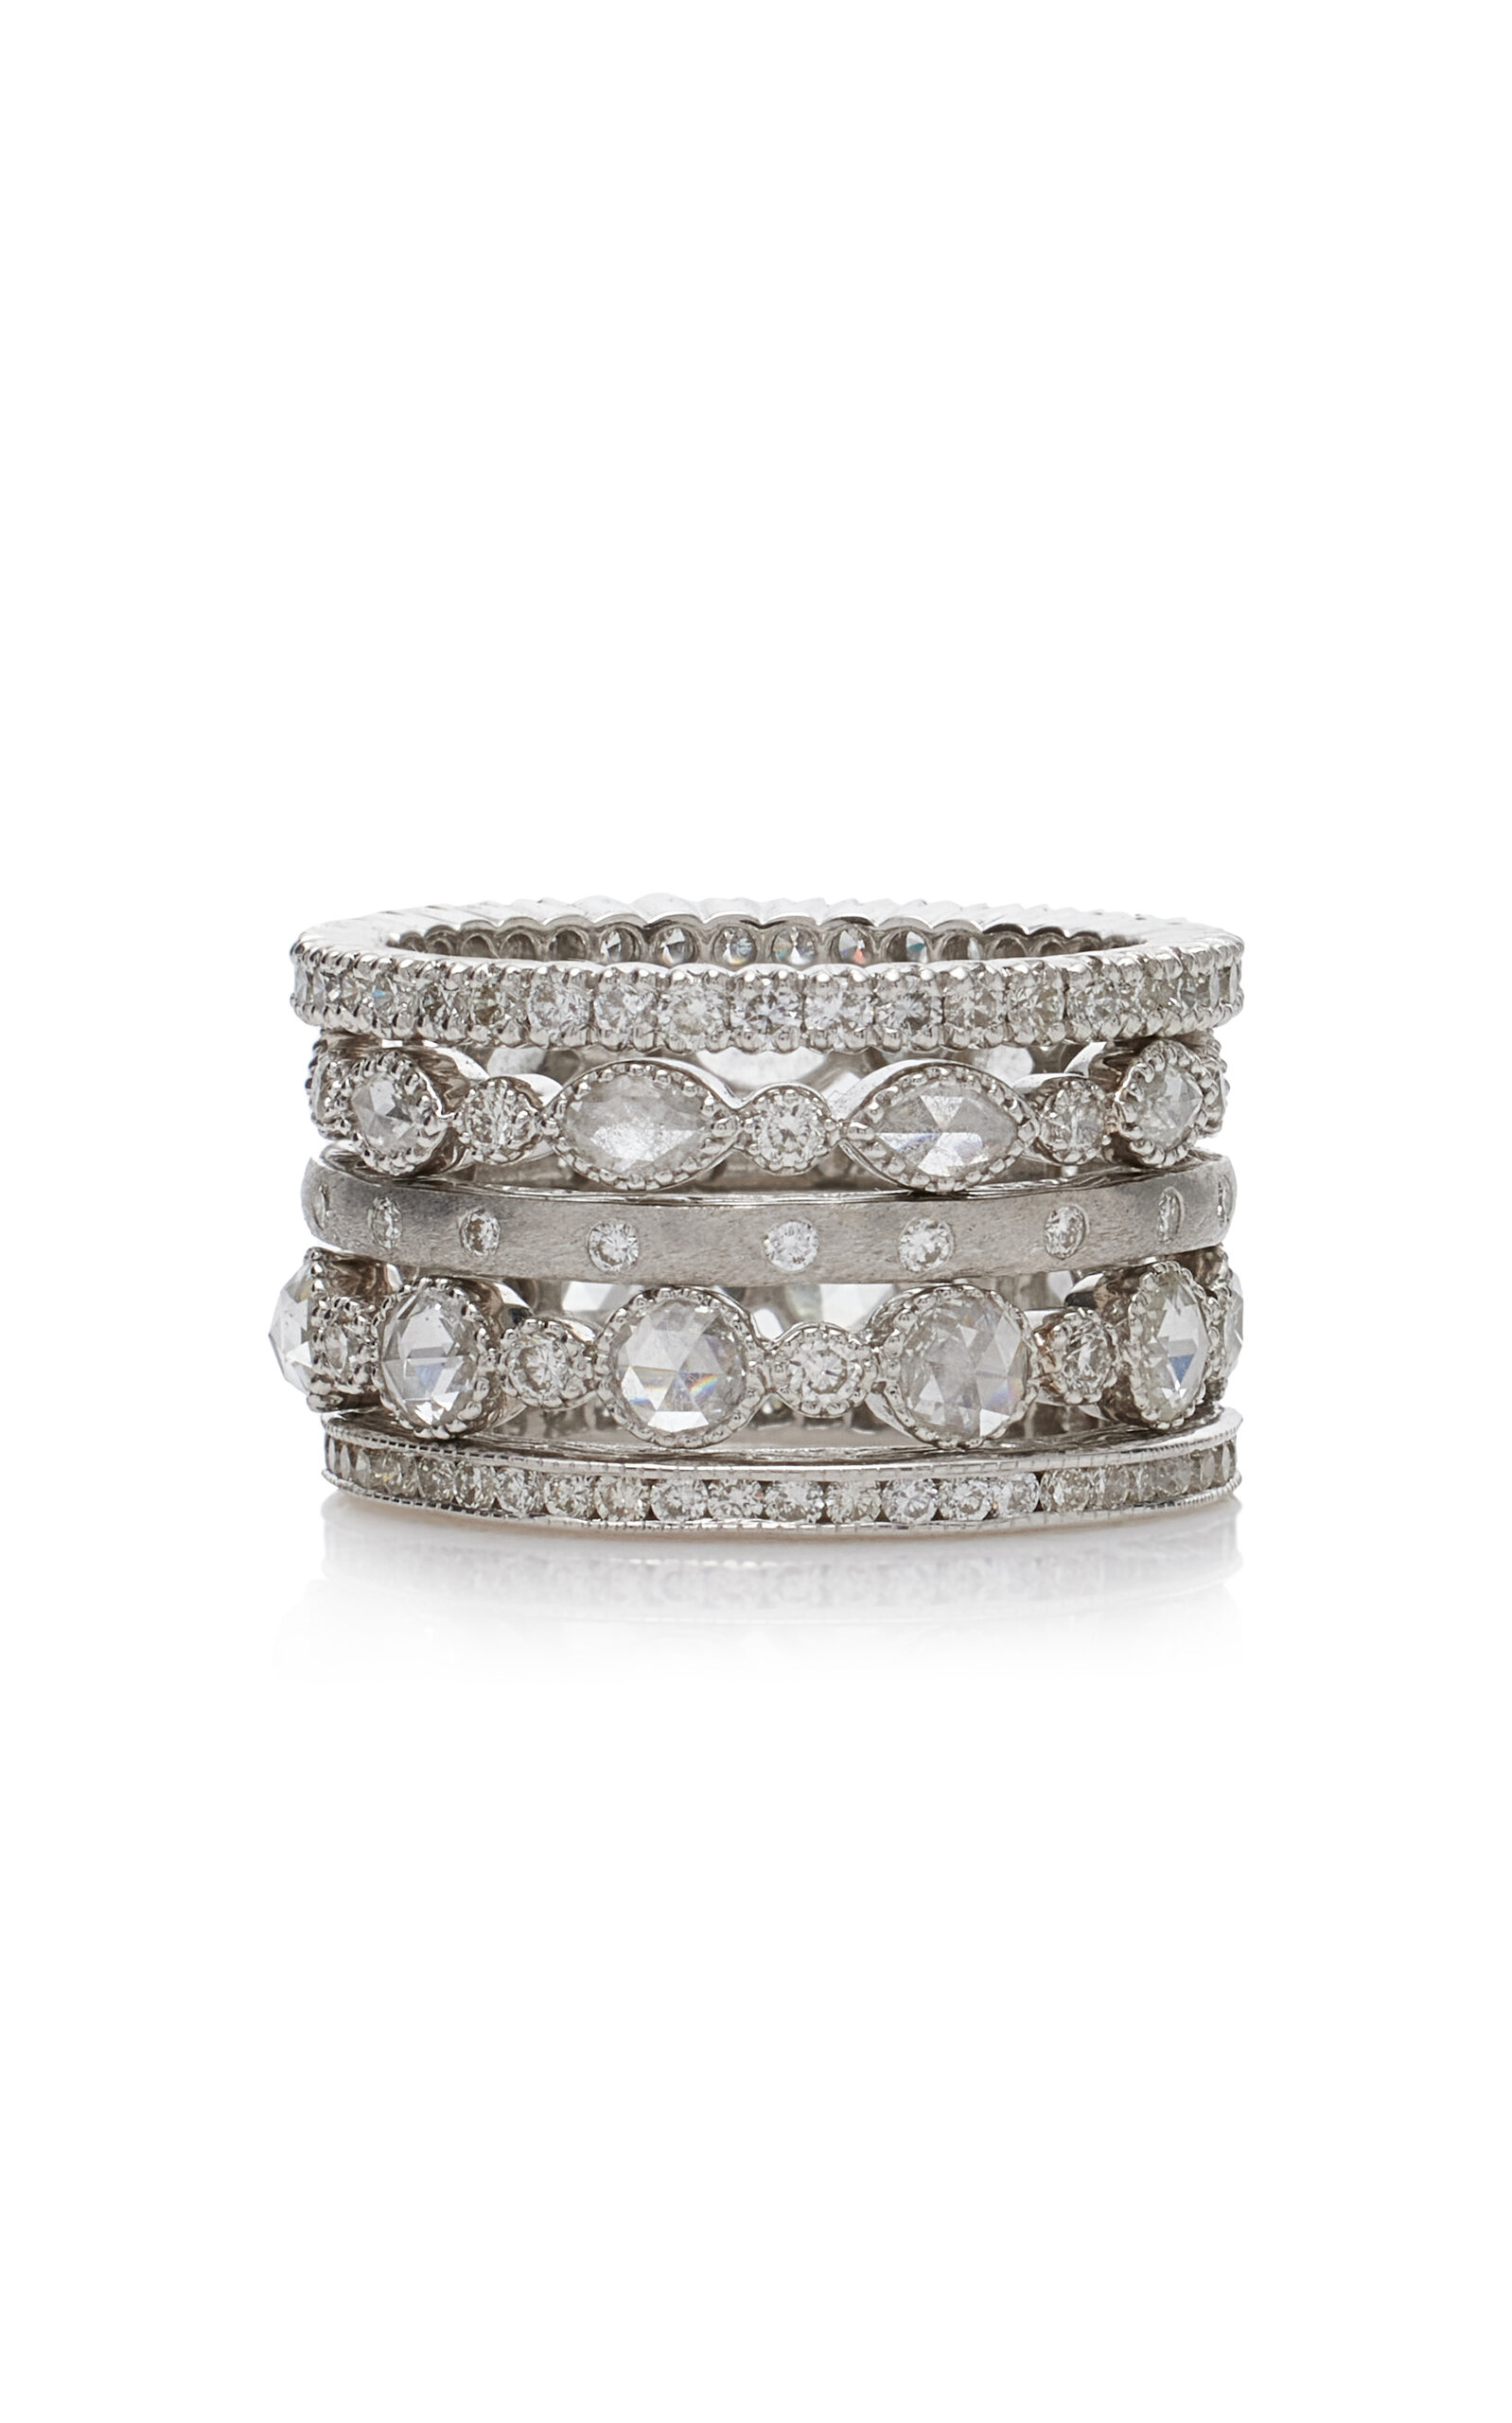 Set-of-Five 18K White Gold Diamond Rings